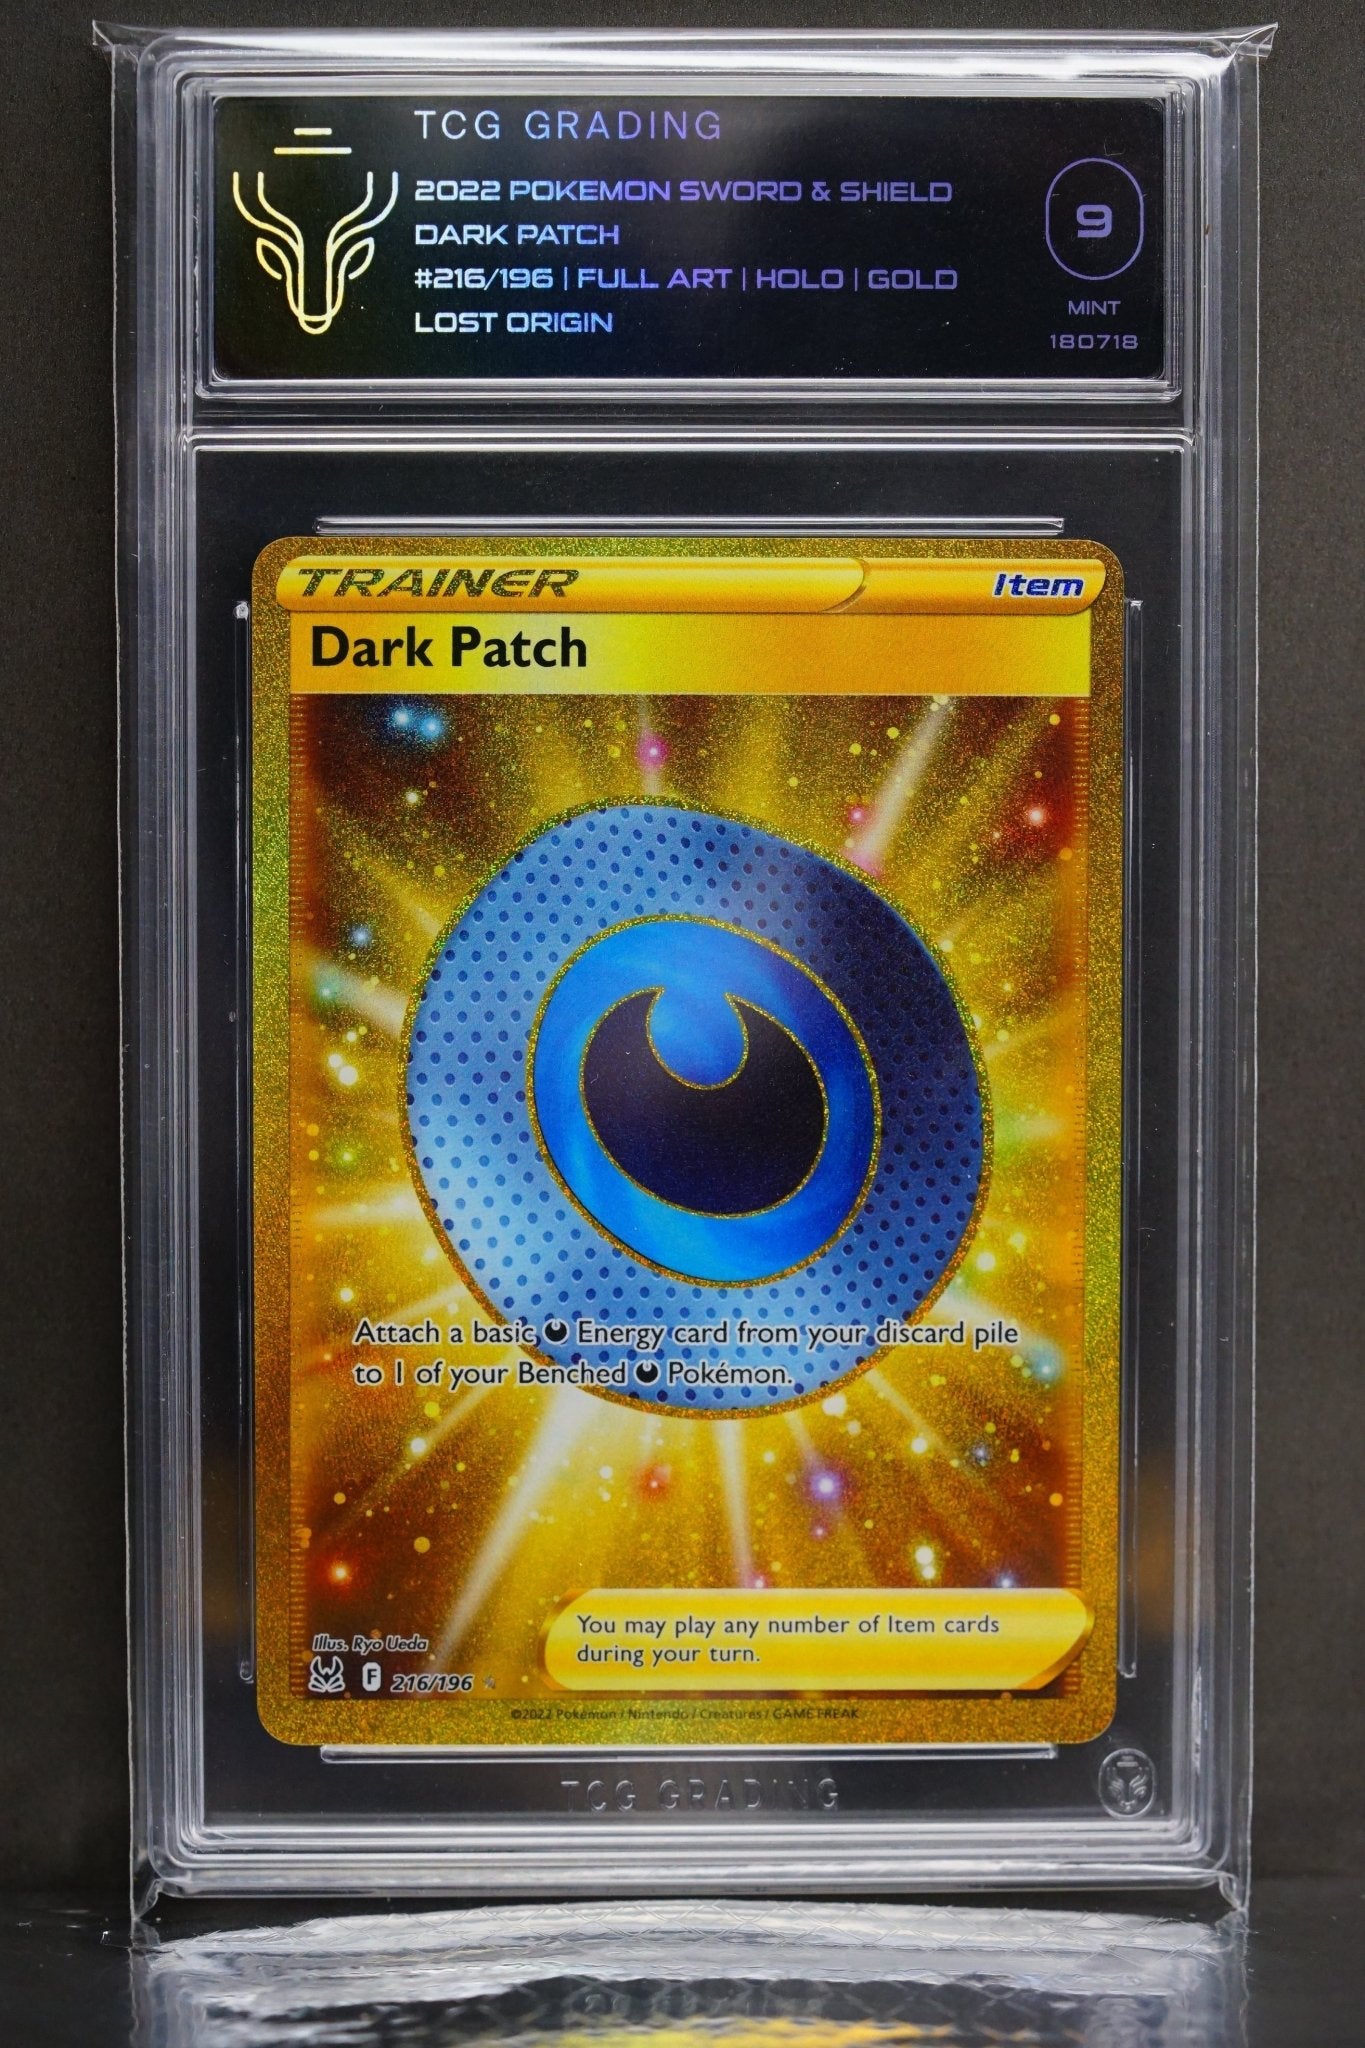 Pokemon Card: DARK PATCH 216/196 TCG MINT 9 - THE CARD SPOT PTY LTD.GradedThe card spot